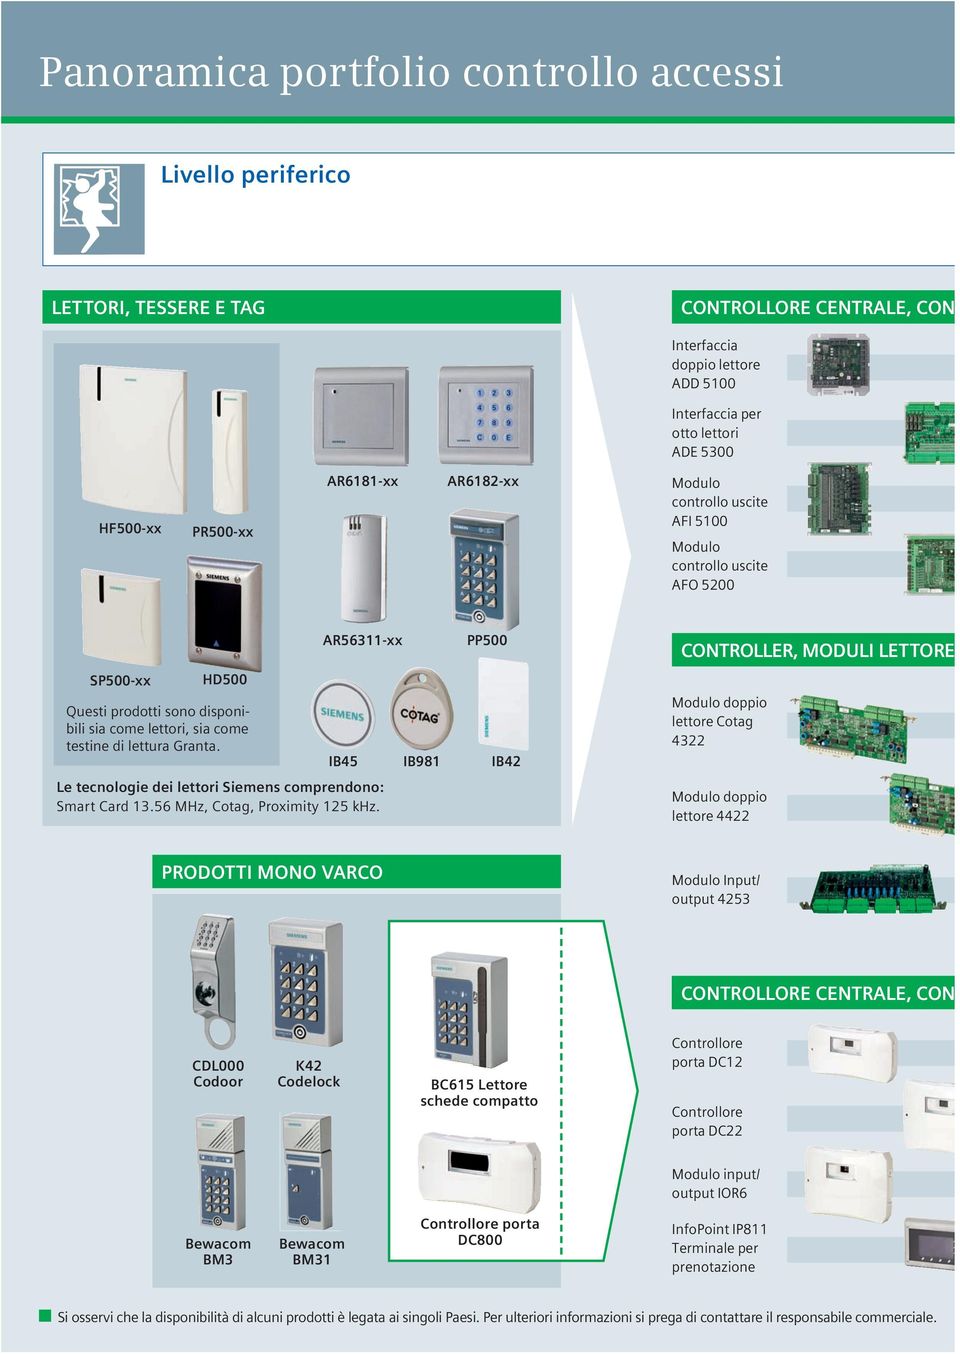 AR56311-xx IB45 Le tecnologie dei lettori Siemens comprendono: Smart Card 13.56 MHz, Cotag, Proximity 125 khz.